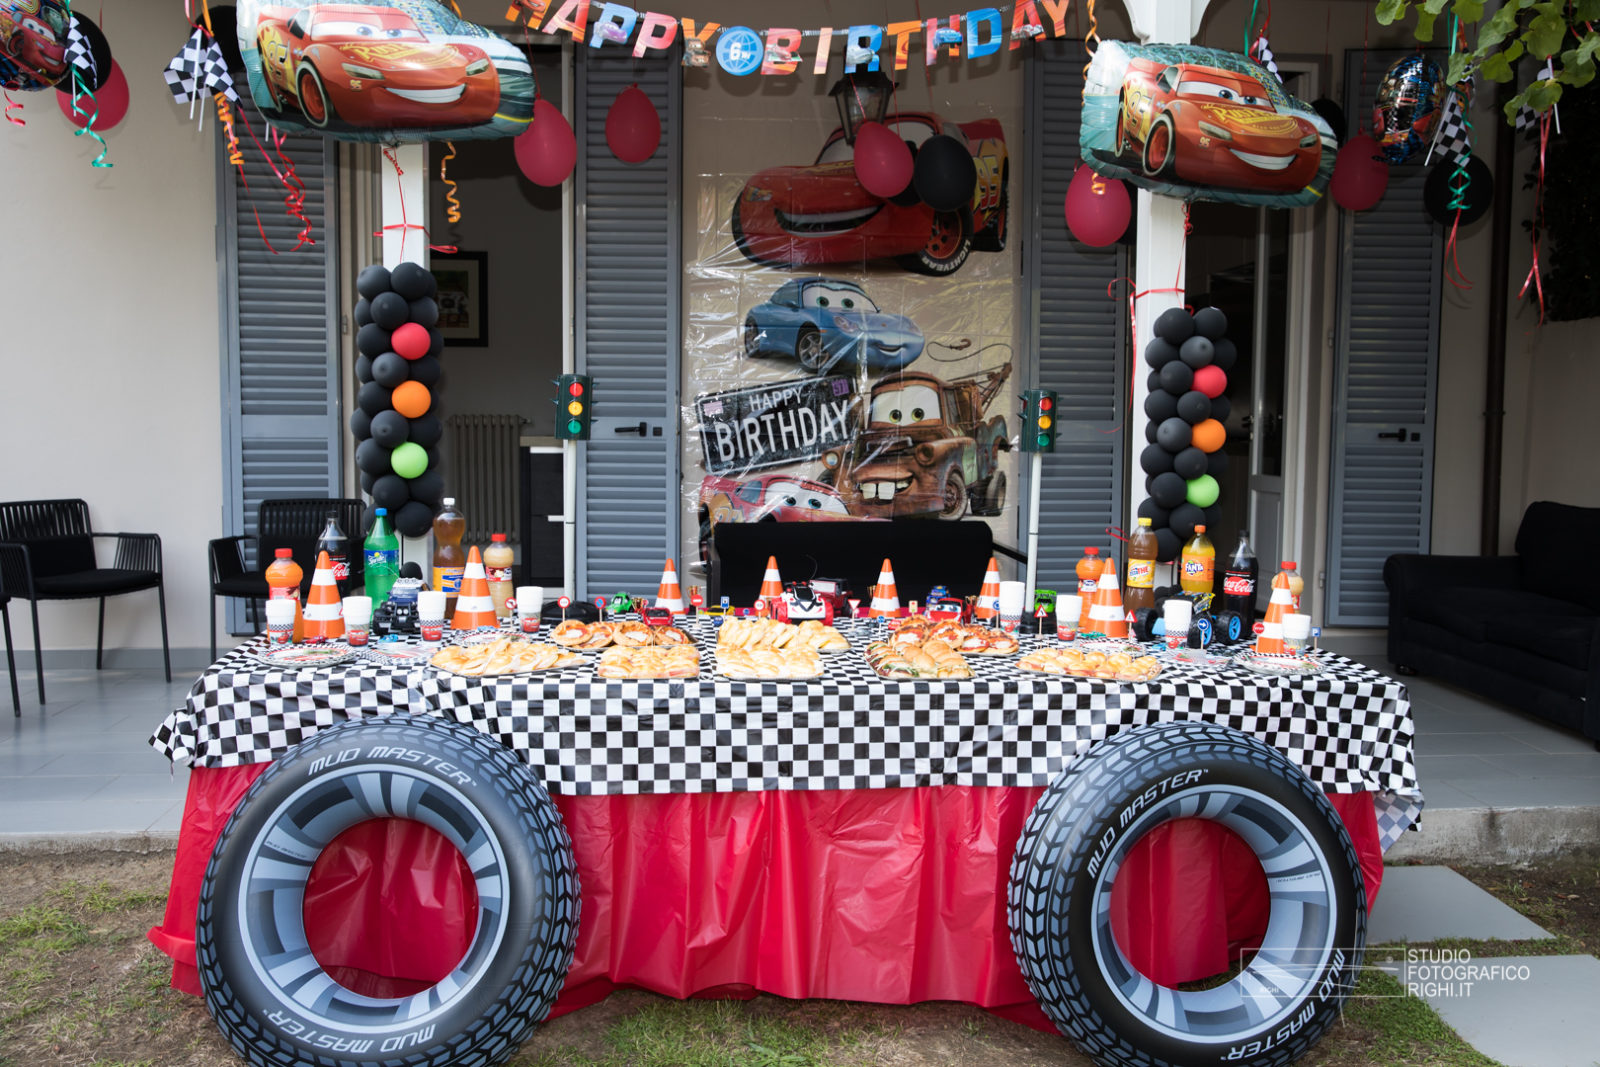 La festa di compleanno di Josè in stile Cars! - Dalahi Ortiz